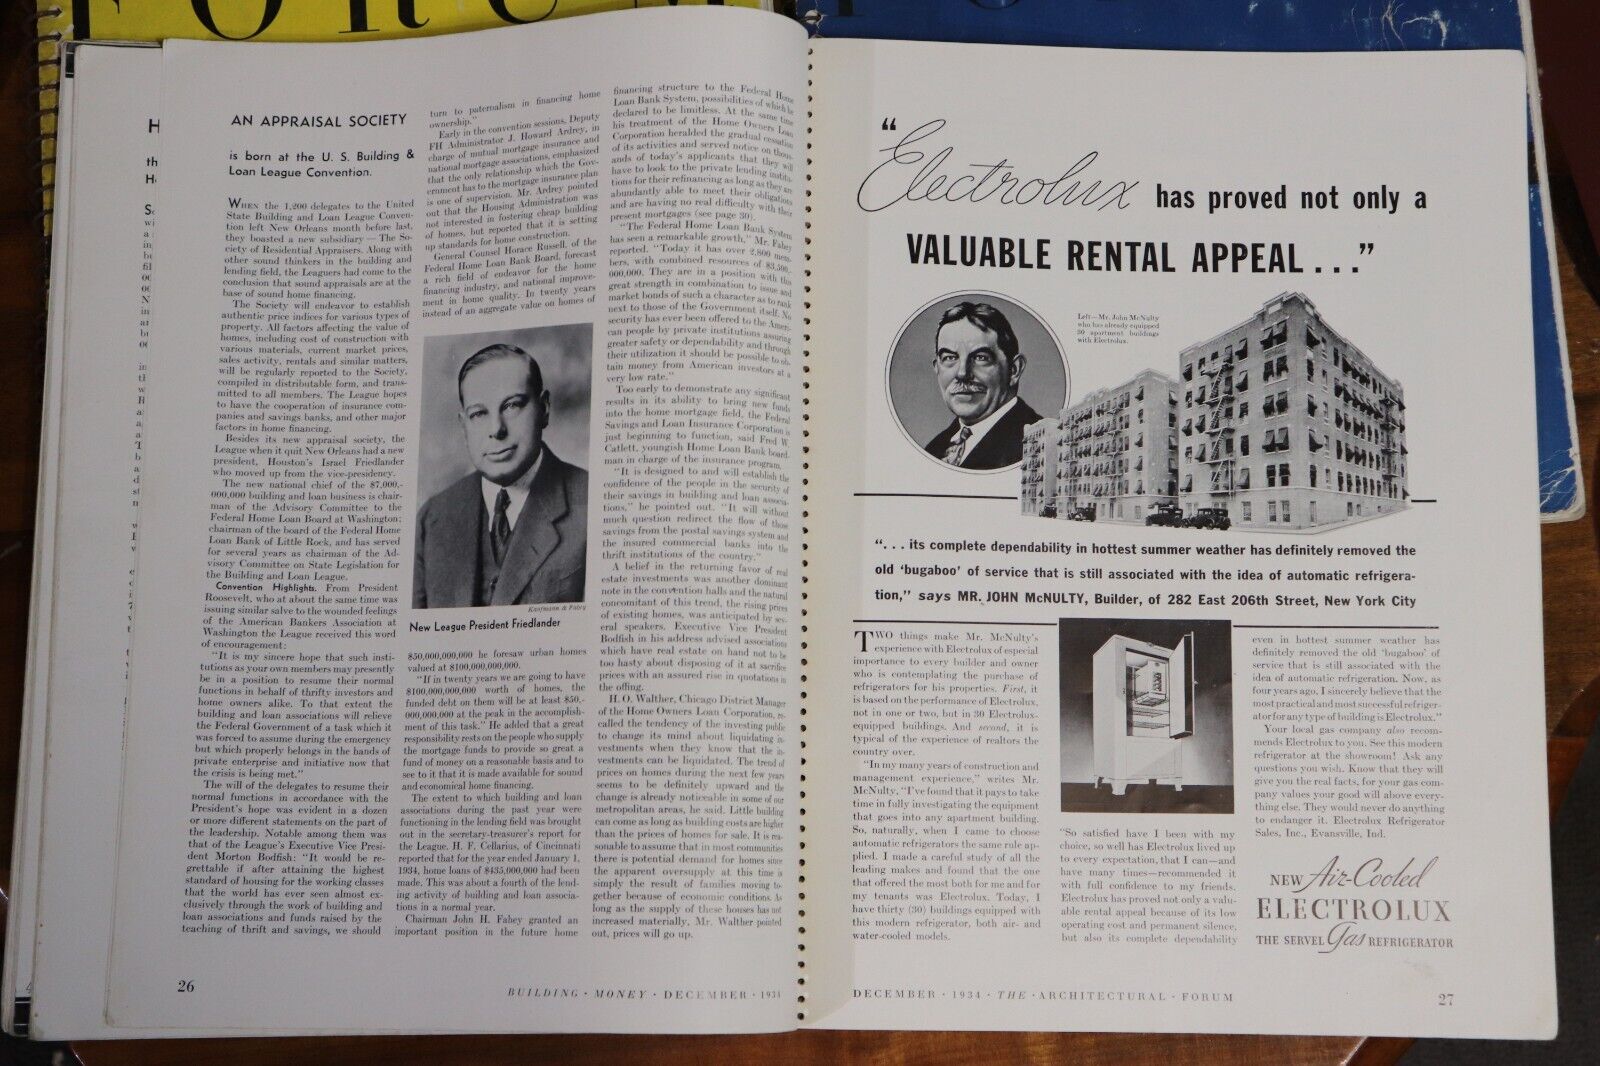 The Architectural Forum: Building Money - 1934/5 - Antique Architecture Books